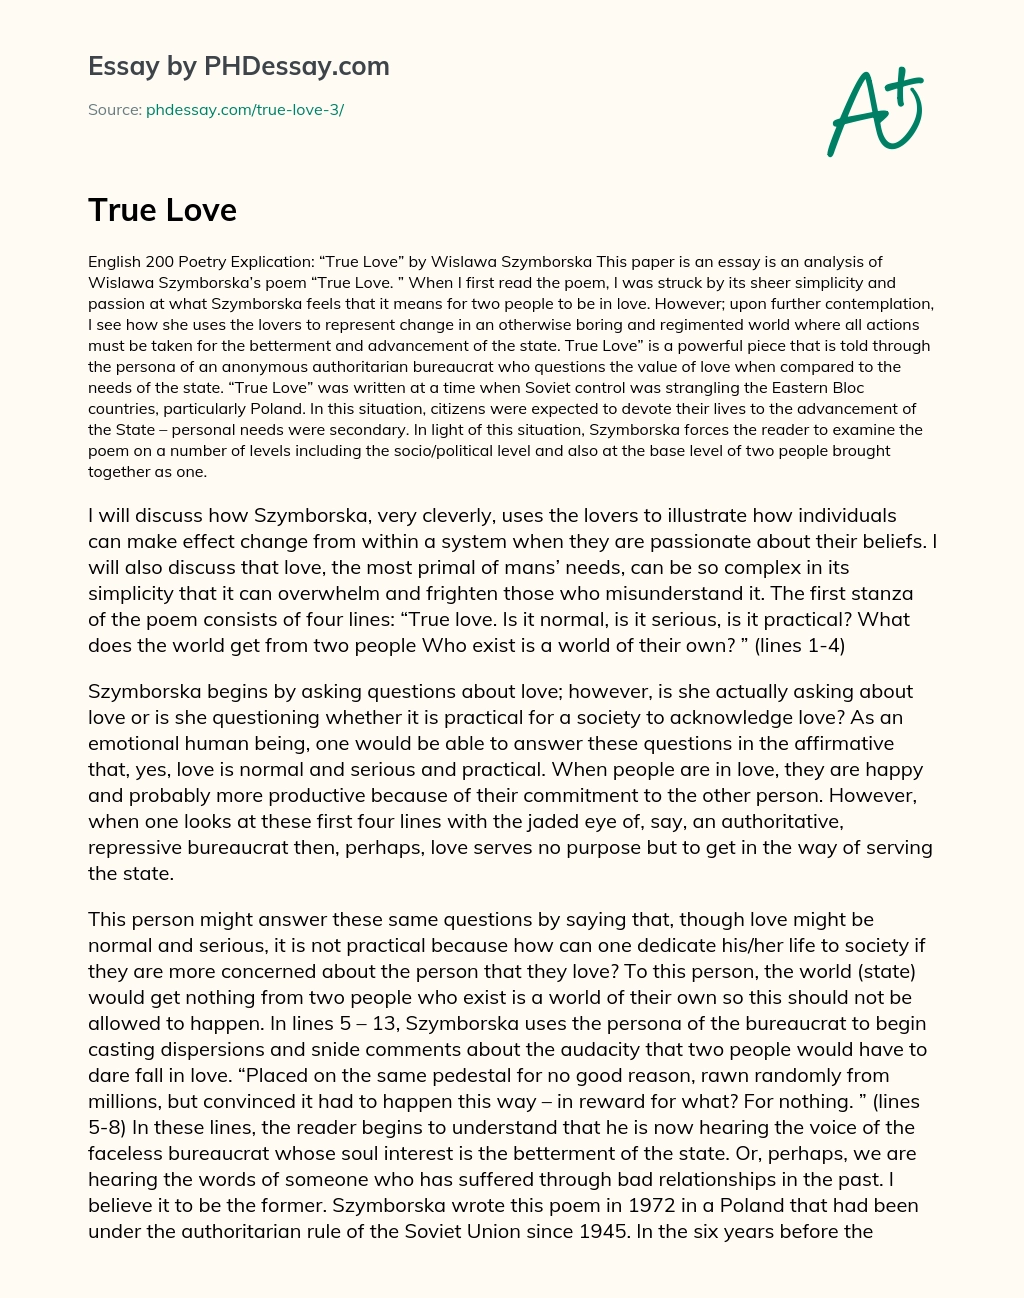 The power of love in a regimented society: Analysis of Wislawa Szymborska’s True Love” poem essay